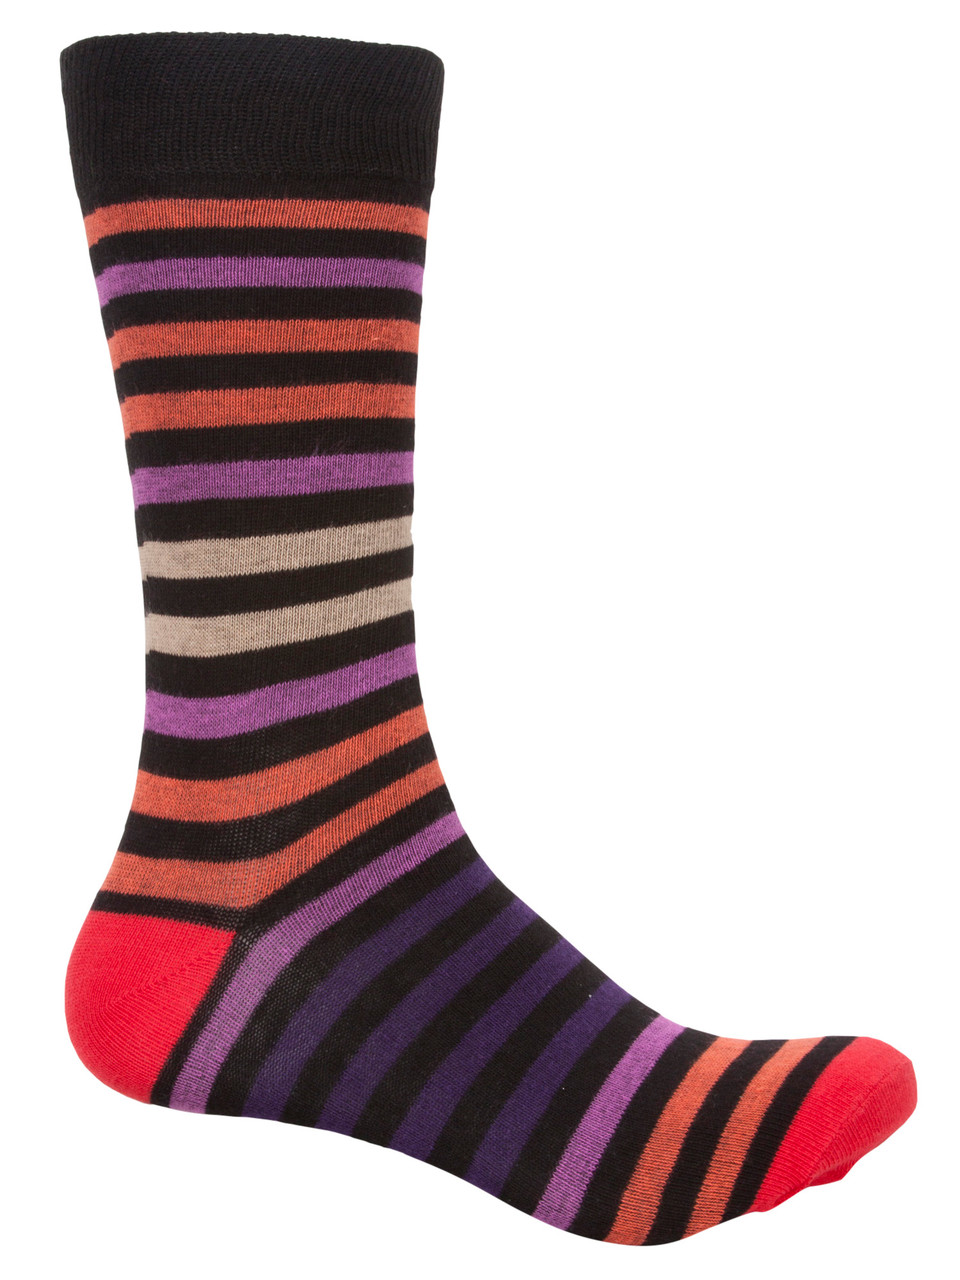 Finefit Cotton Comfort Striped High Socks - Black/Purple/Red - 10-13 ...